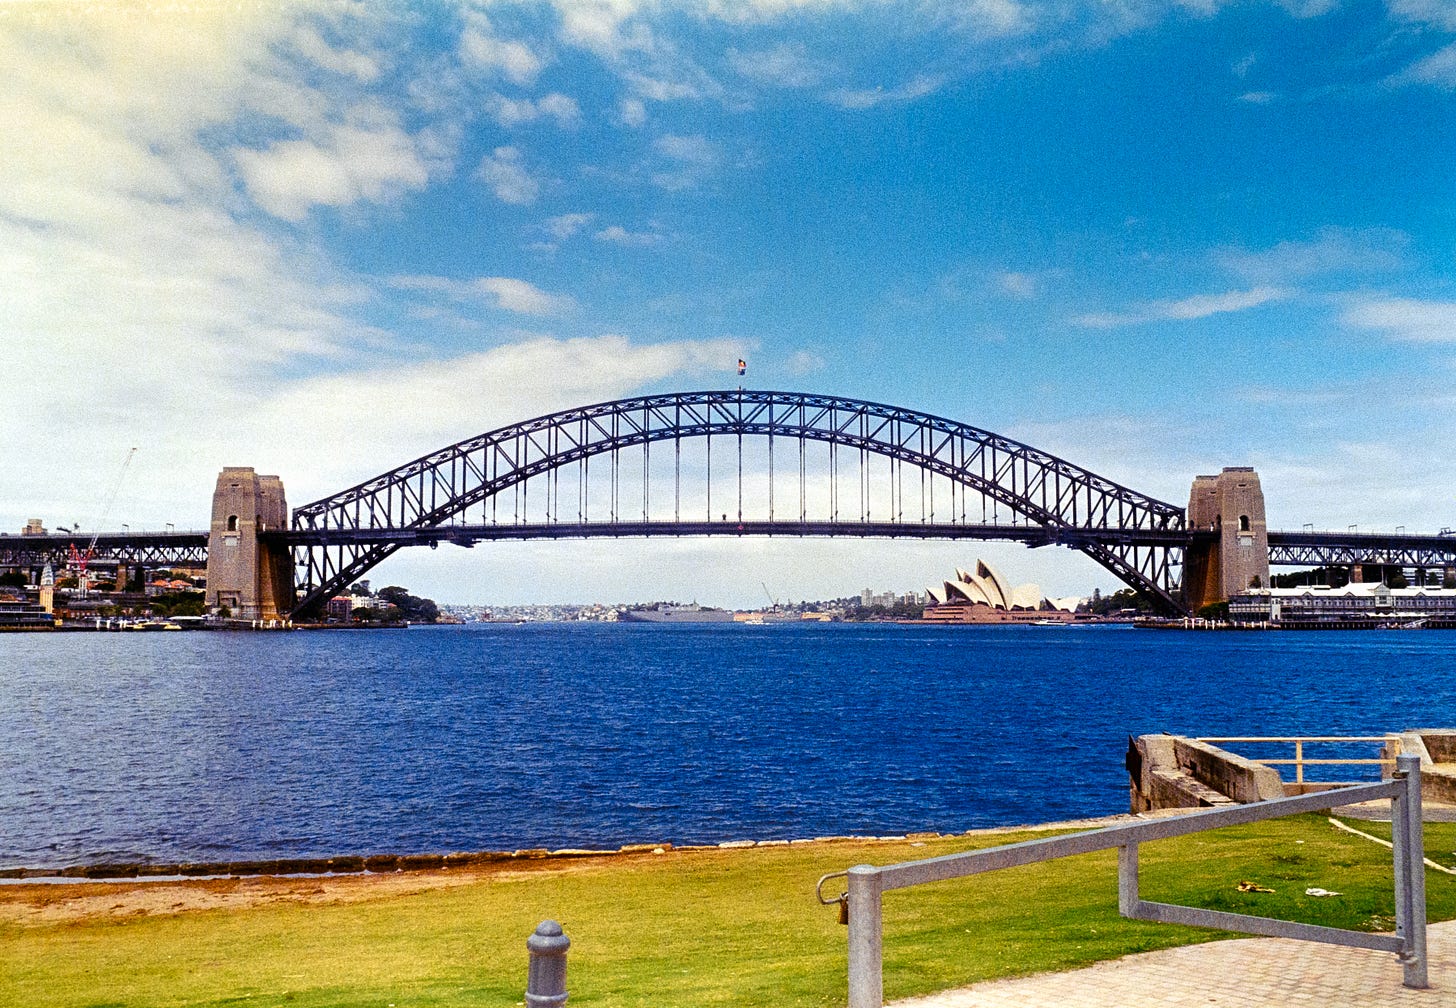 A wide angle image of the Harbor Bridge, in Sydney, Australia